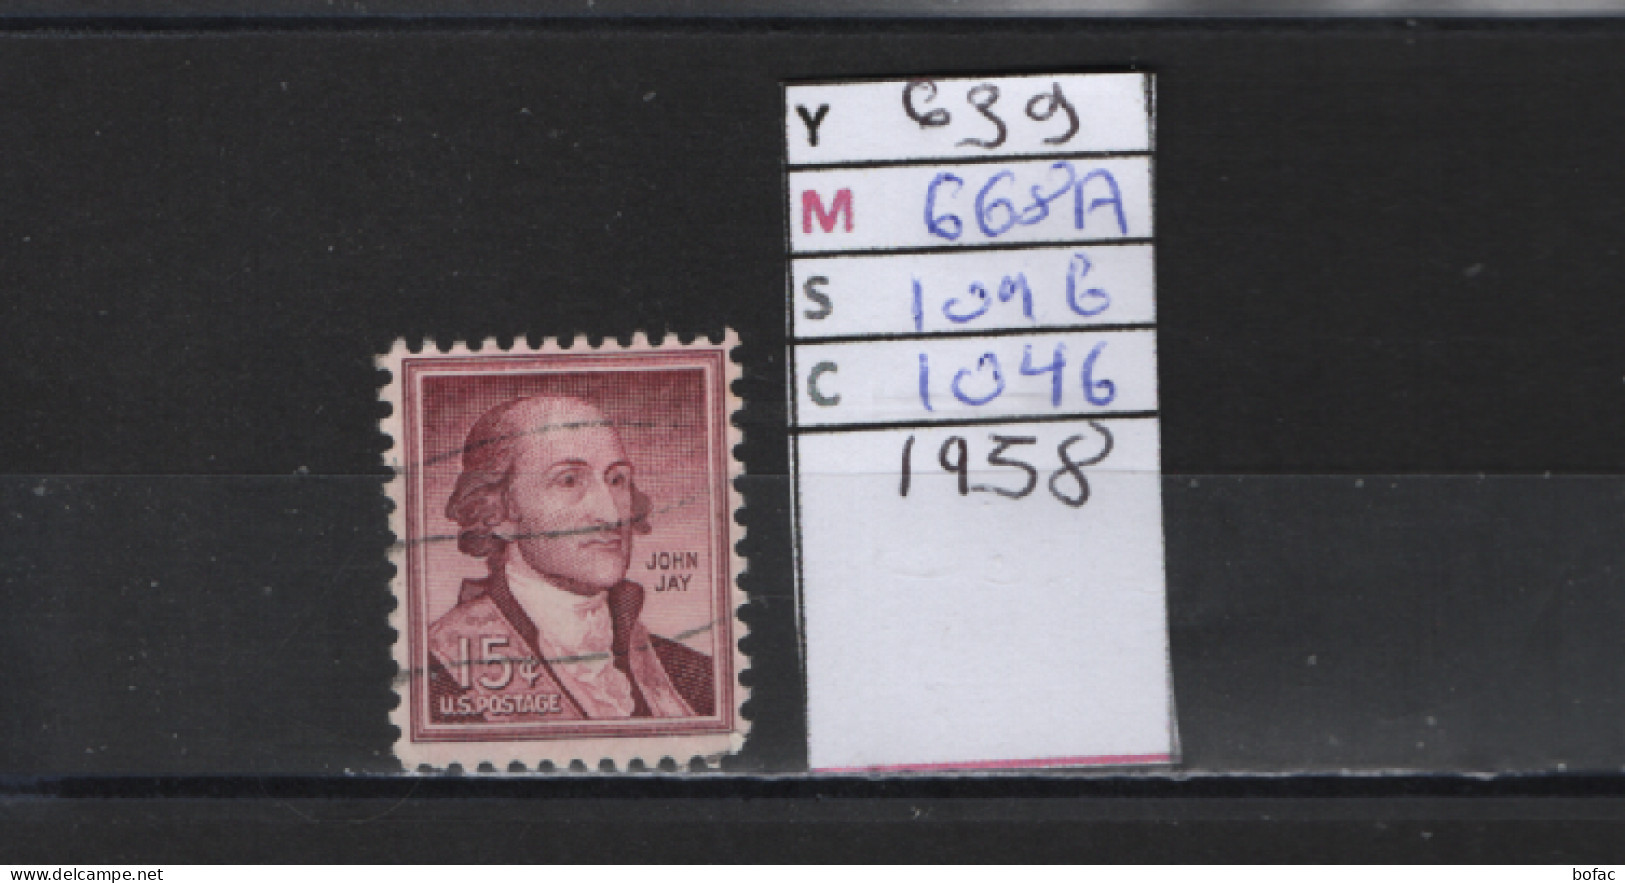 PRIX FIXE Obl  639 YT 668A MIC 1046 SCO 1046 GIB John Jay 1958 Etats Unis  58A/07 - Used Stamps